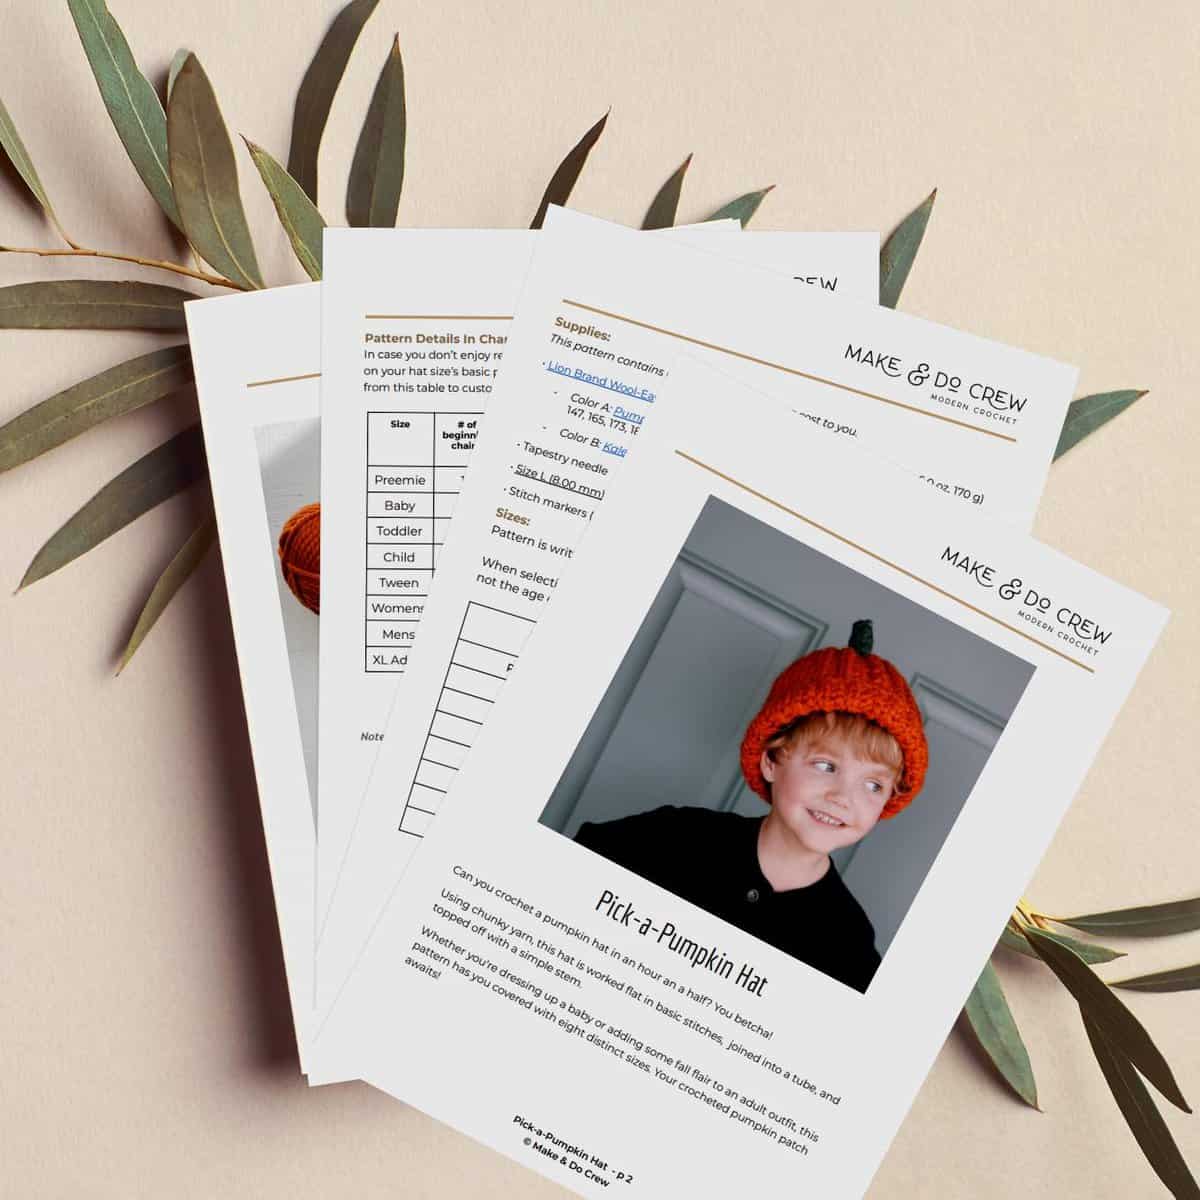 Printable pdf preview of the Pick a Pumpkin hat pattern.